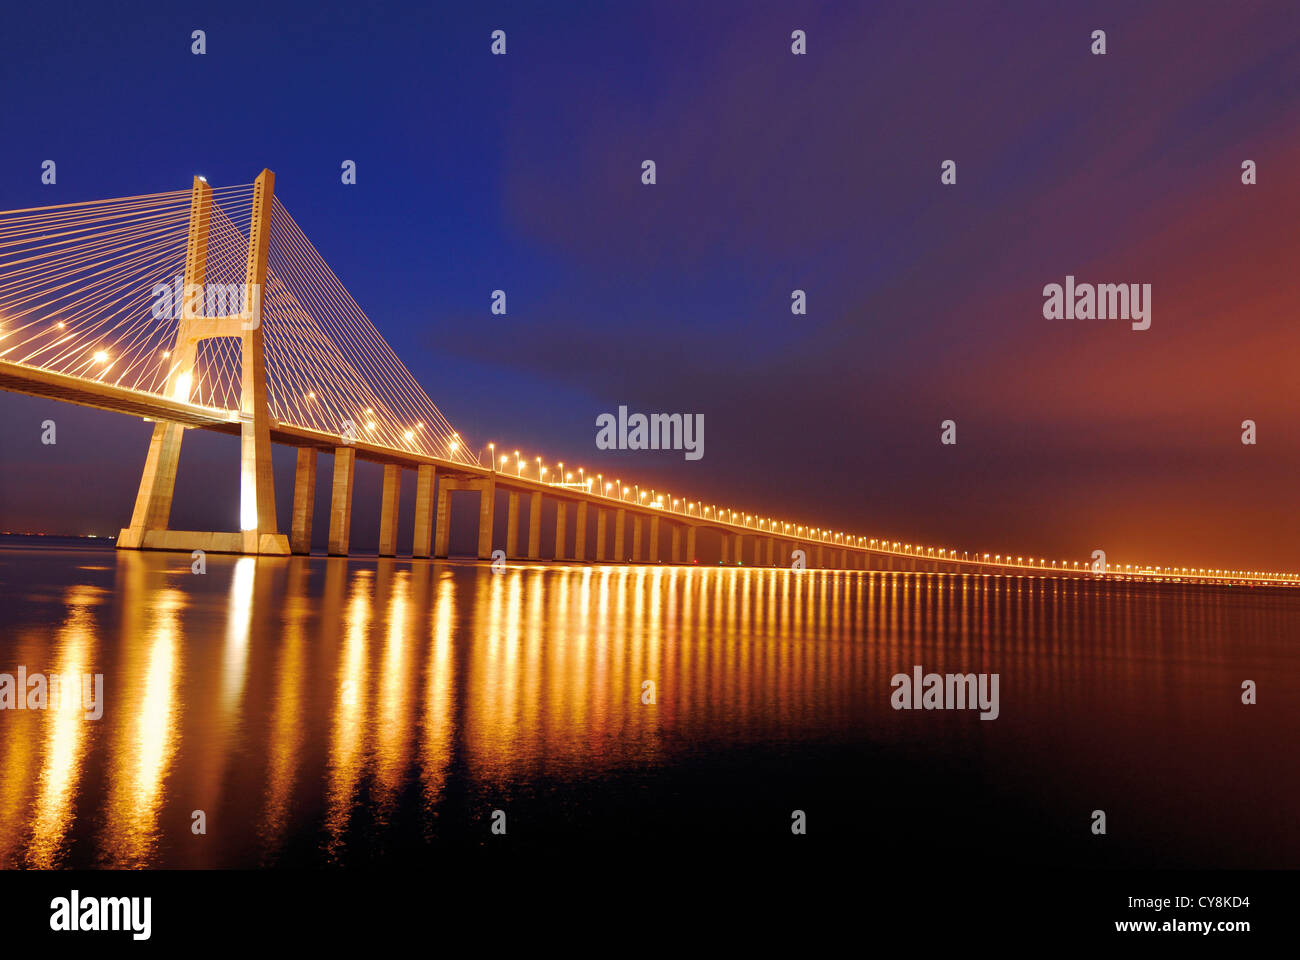 Portugal, Lisbon: Bridge Ponte Vasco da Gama by night with scenic sky Stock Photo